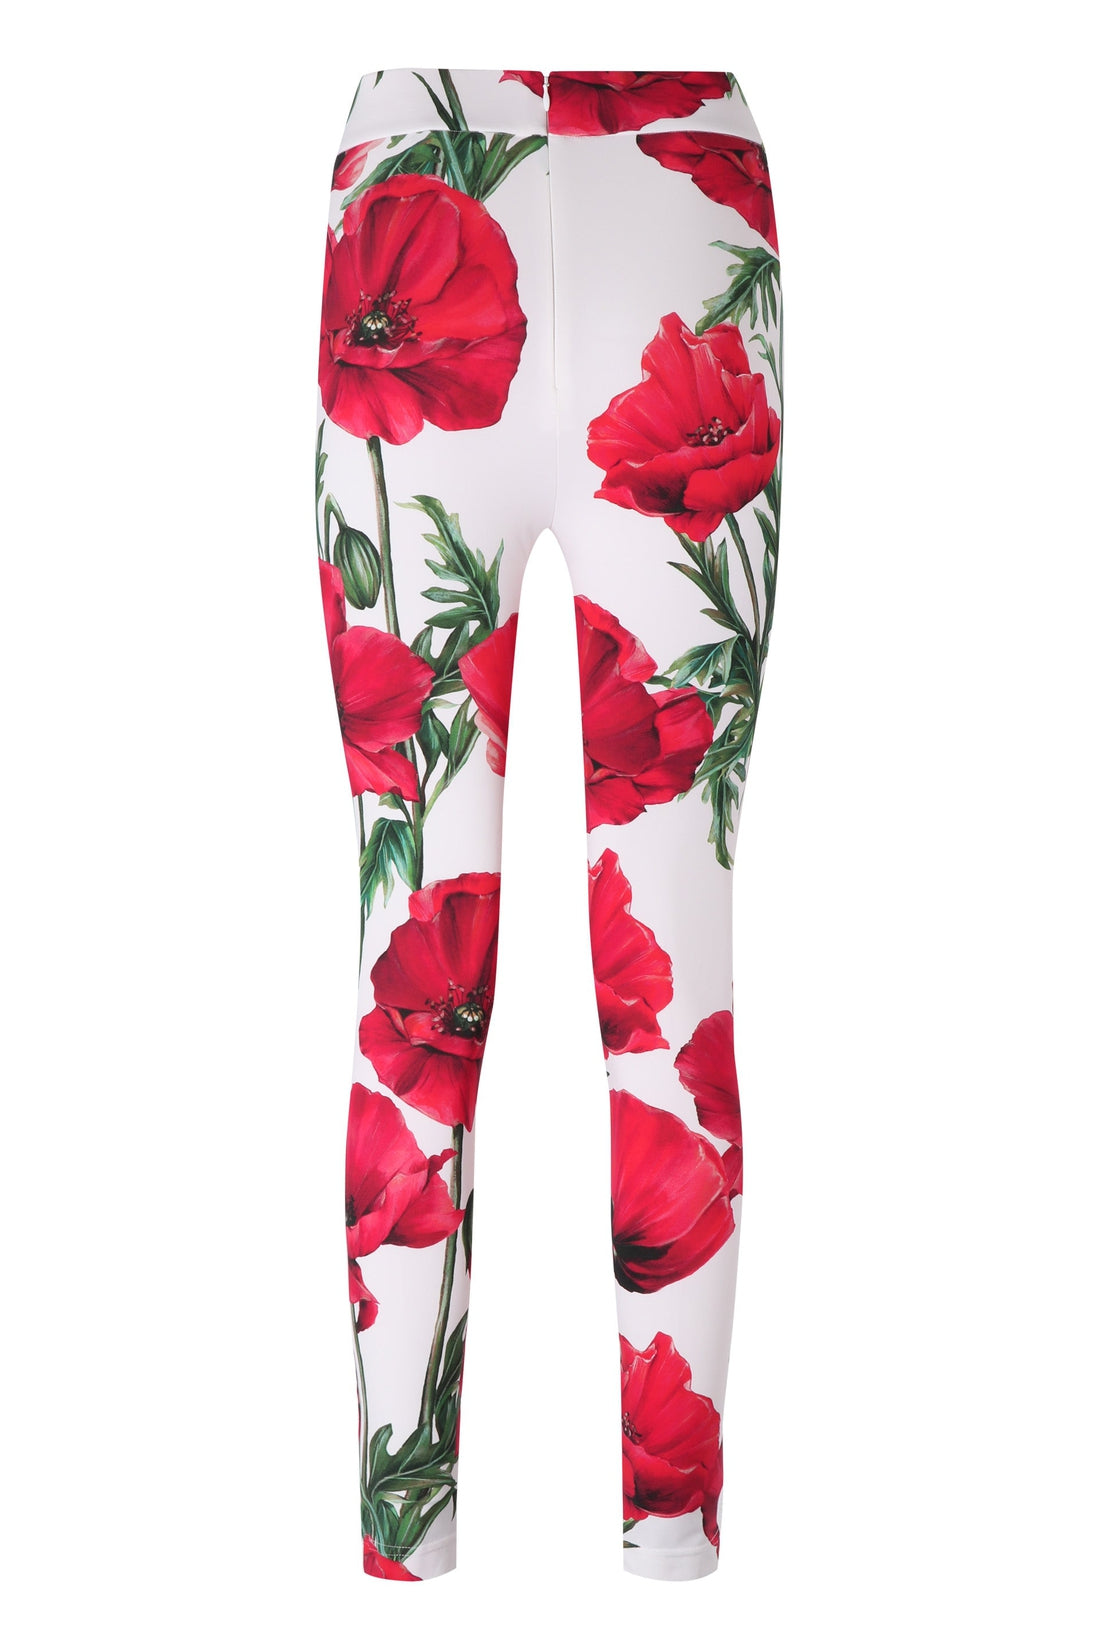 Dolce & Gabbana-OUTLET-SALE-Flower print leggings-ARCHIVIST